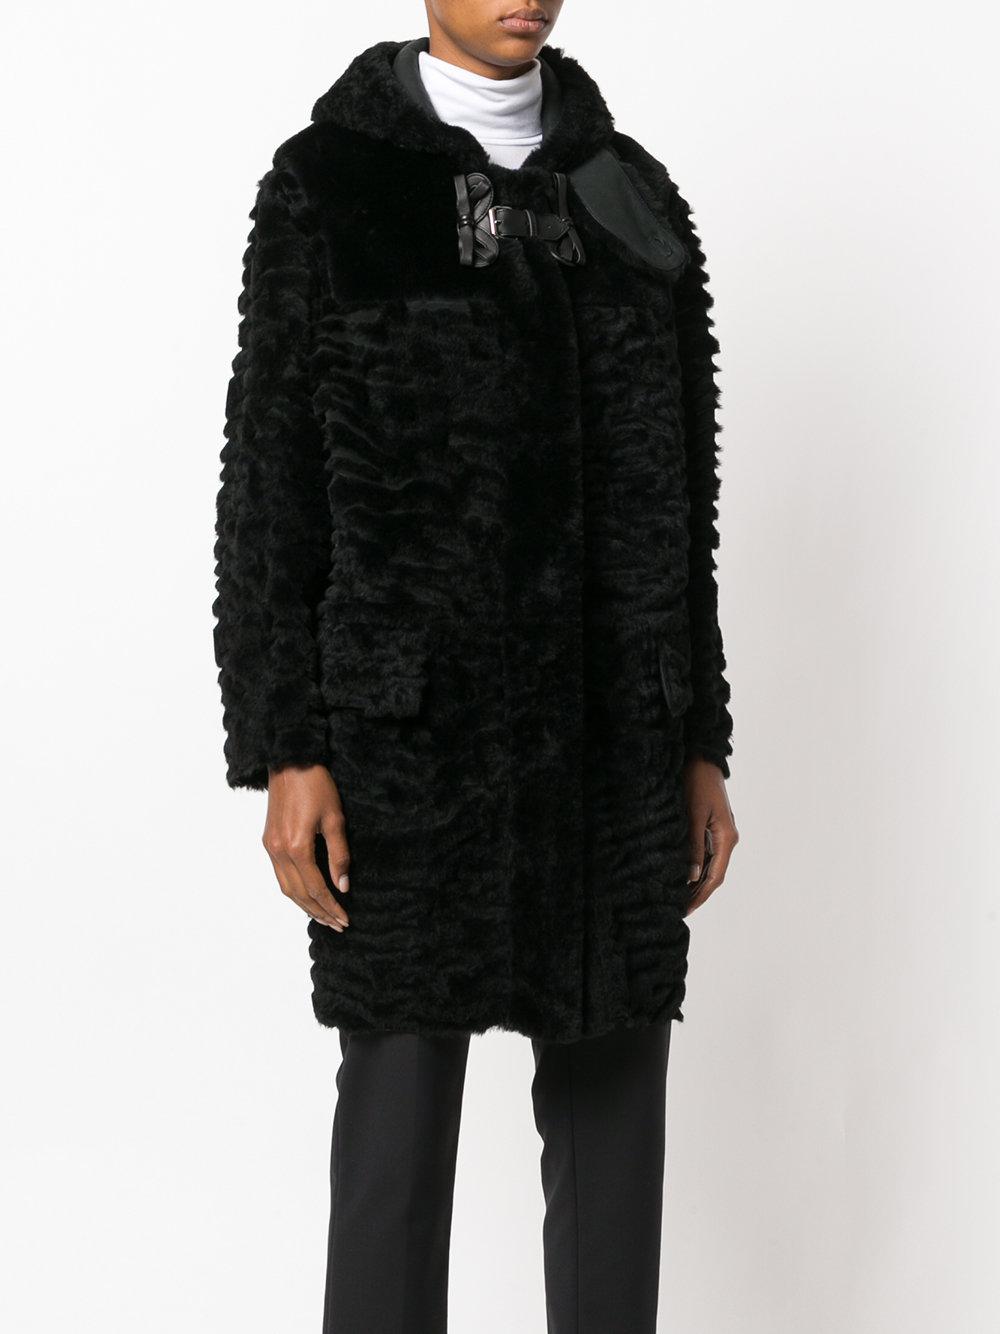 Fendi Fur Bow Buckle Coat in Black - Lyst